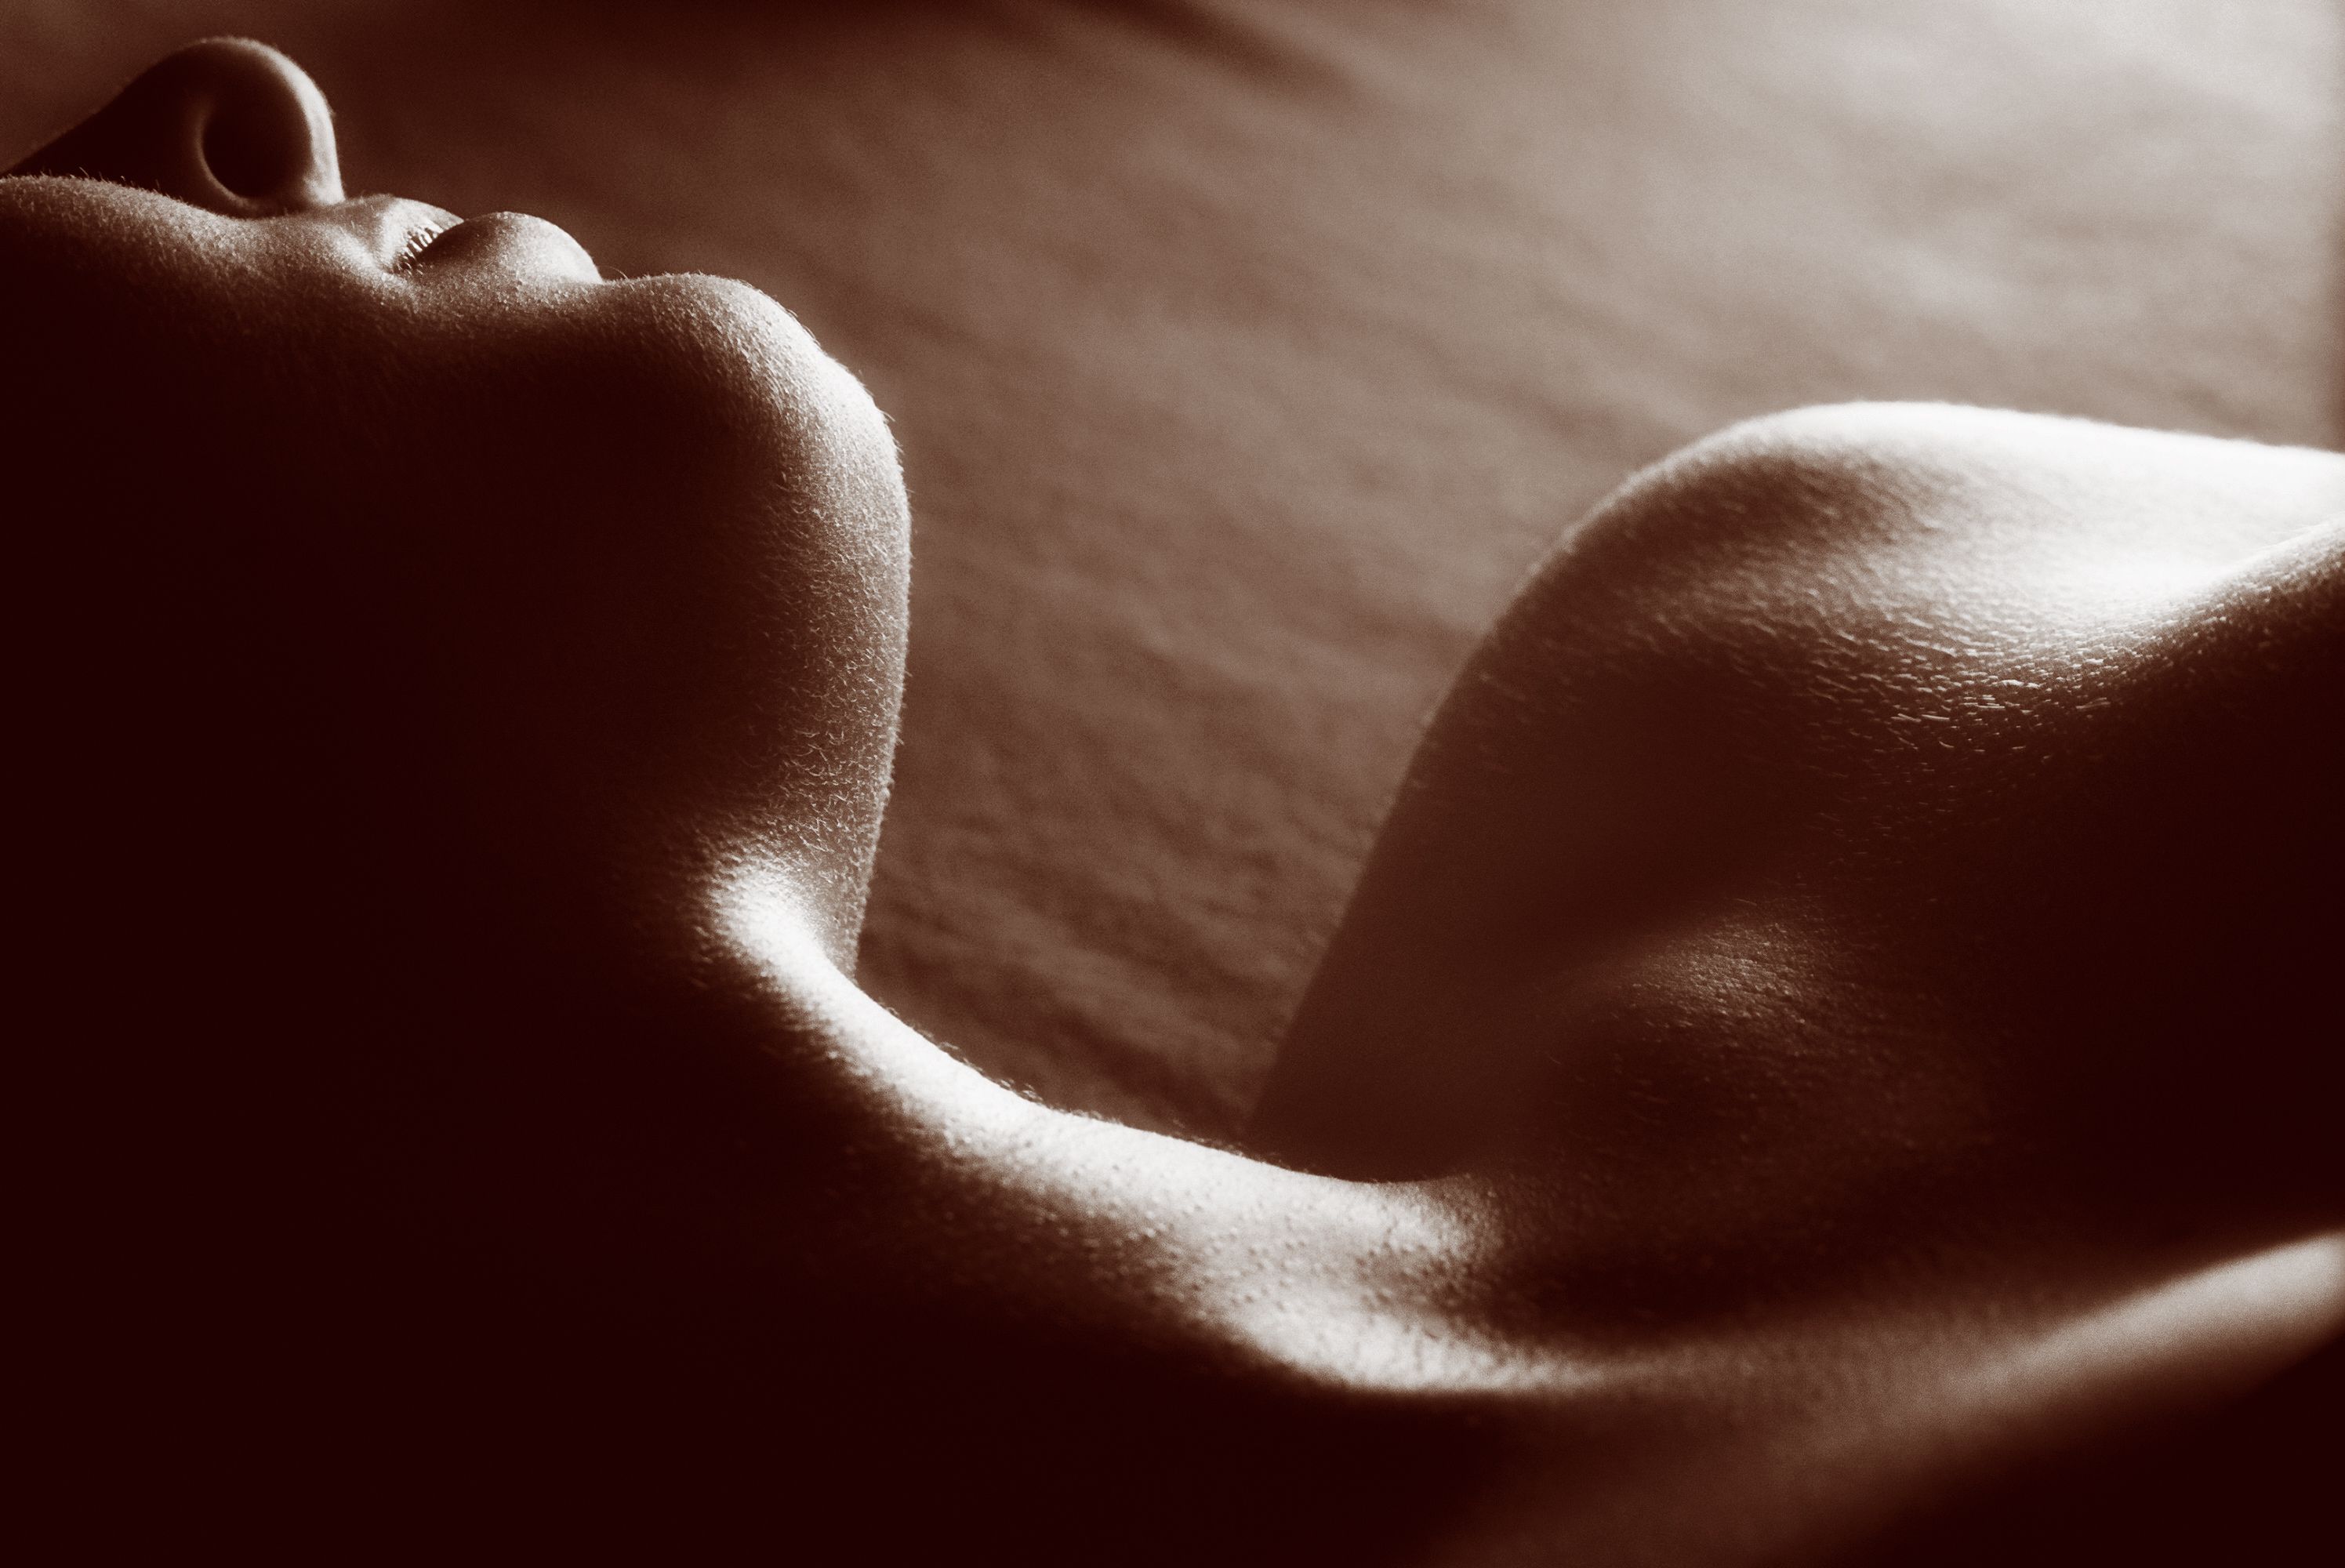 Free the nipple! Tumblr is bringing back nudity photo